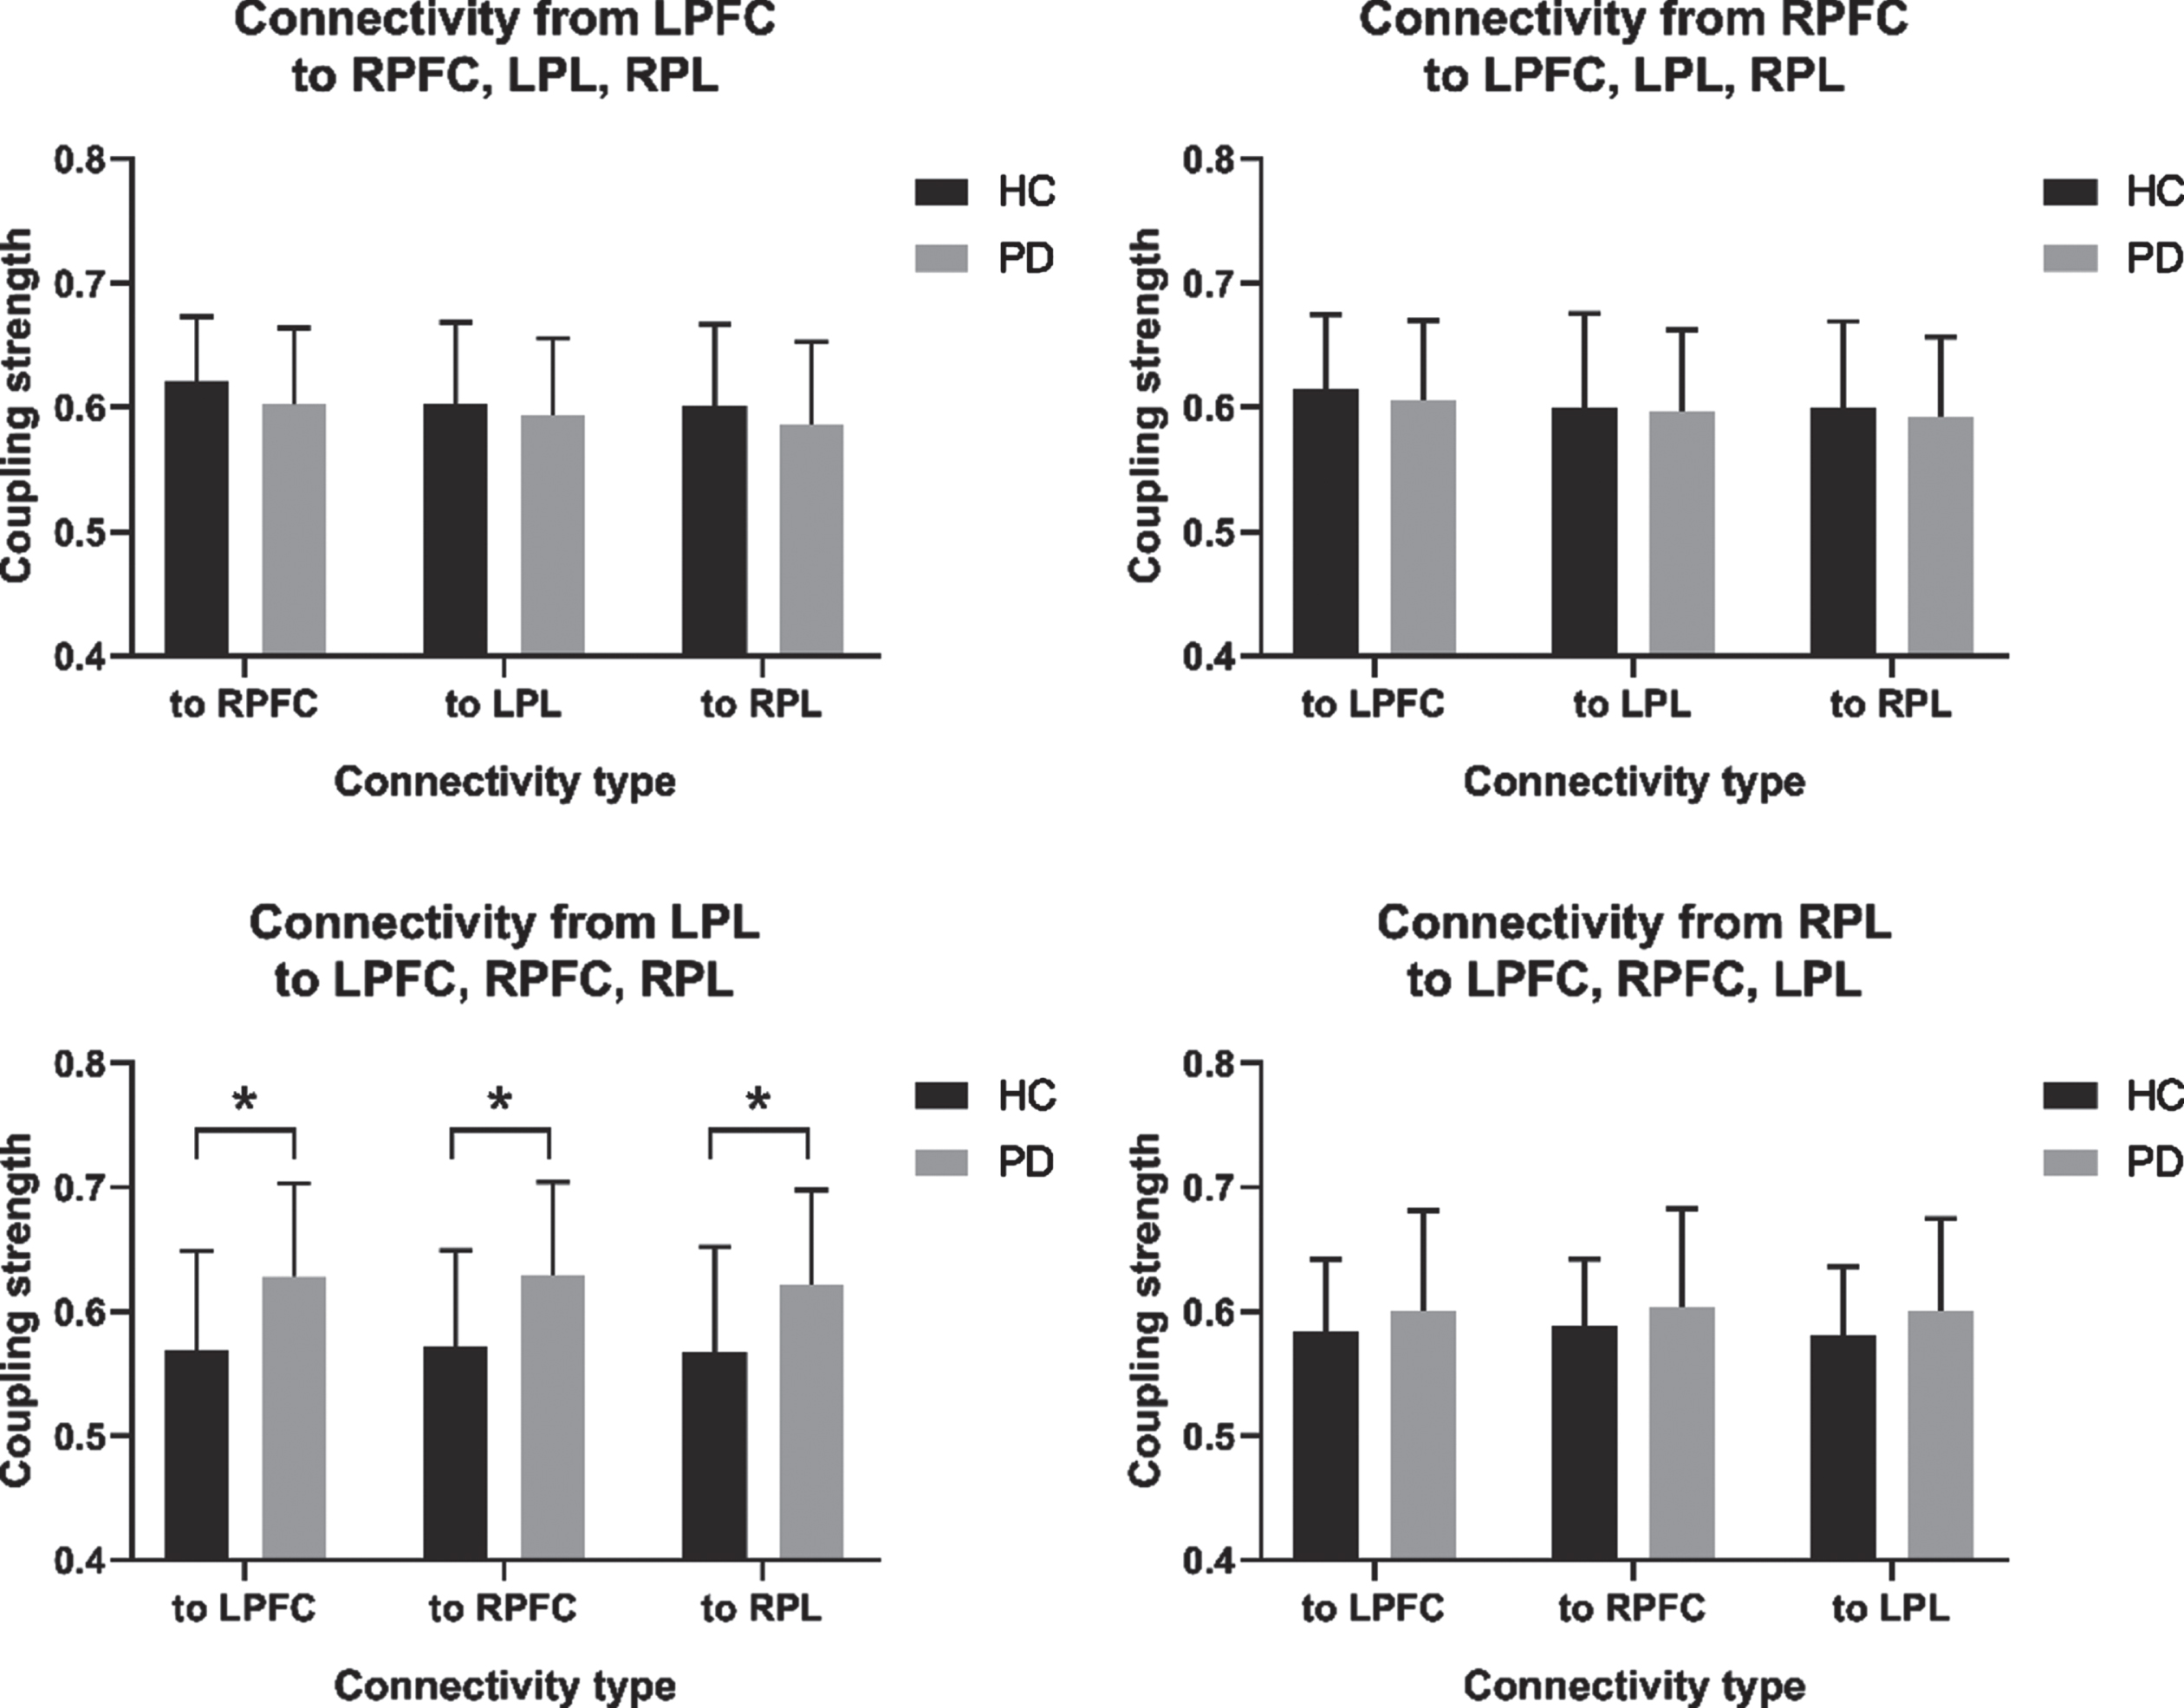 Comparison of regional effective connectivity (EC) between the healthy controls (HC) and Parkinson’s disease (PD) group. (A) Connectivity from the LPFC to the RPFC, LPL, and RPL. (B) Connectivity from the RPFC to the LPFC, LPL, and RPL. (C) Connectivity from the LPL to the LPFC, RPFC, and RPL. (D) Connectivity from the RPL to the LPFC, RPFC, and LPL. LPFC, left prefrontal cortex; LPL, left parietal lobe; RFFC, right prefrontal cortex; RPL, right parietal lobe. *p<0.05.